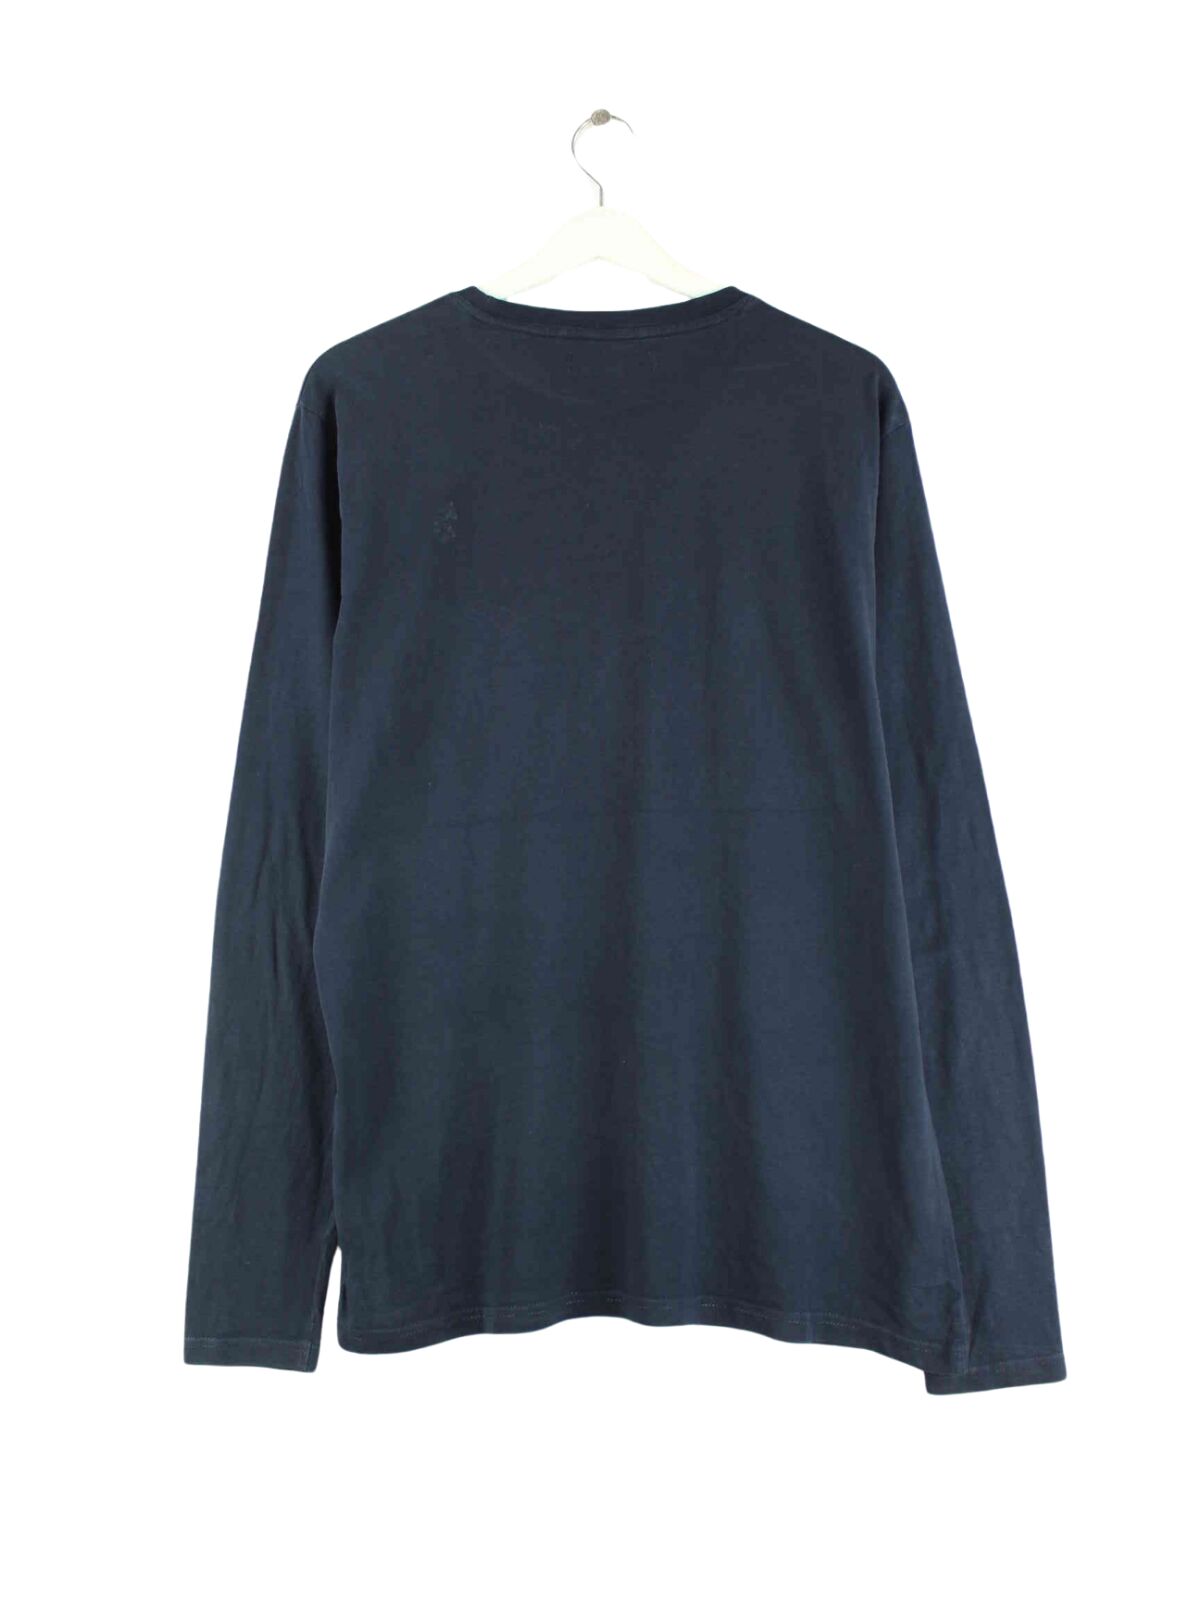 U.S. Polo ASSN. Basic Sweatshirt Blau L (back image)